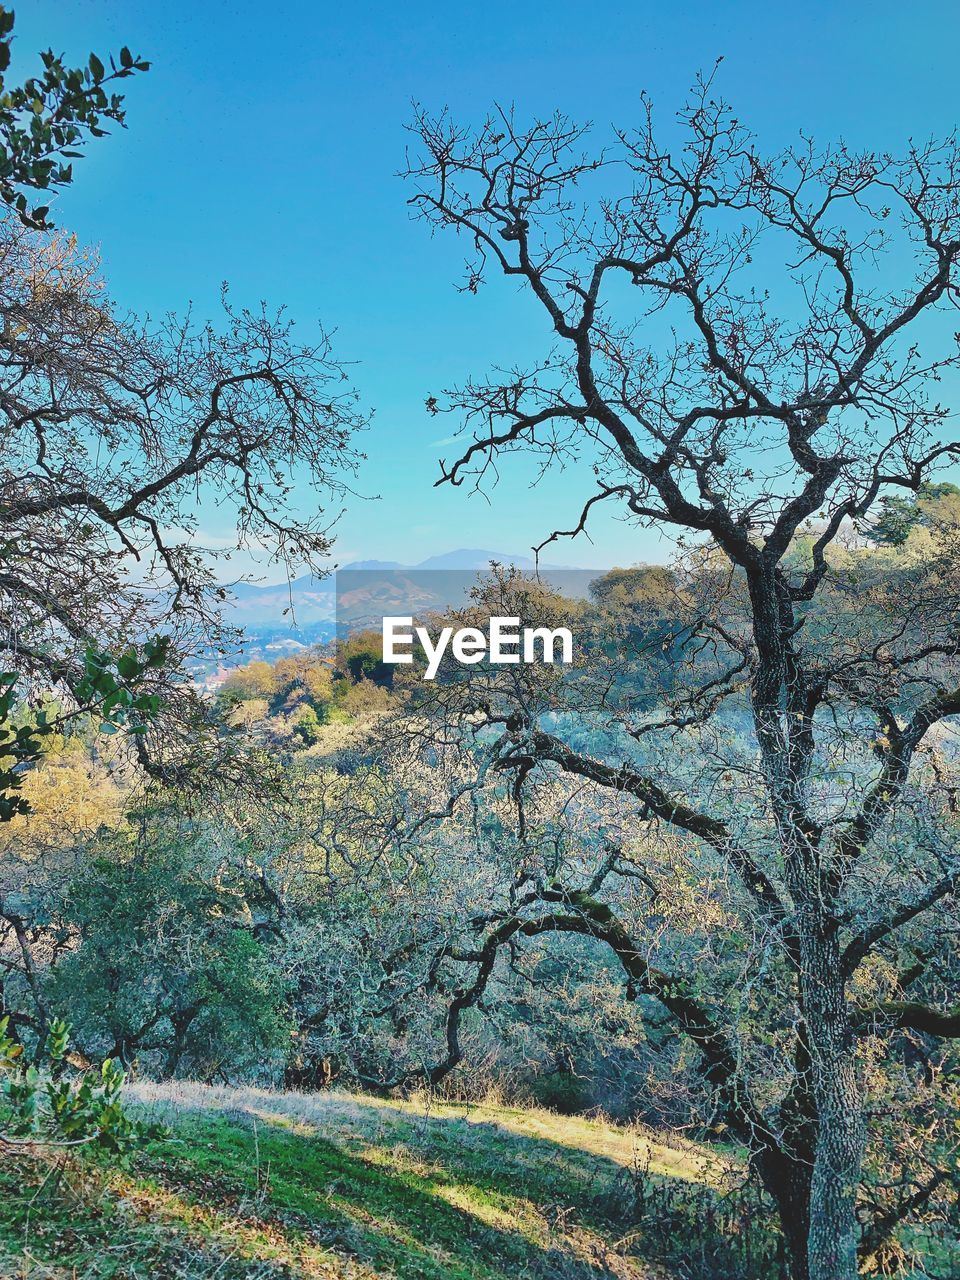 A mountain view through the oaks